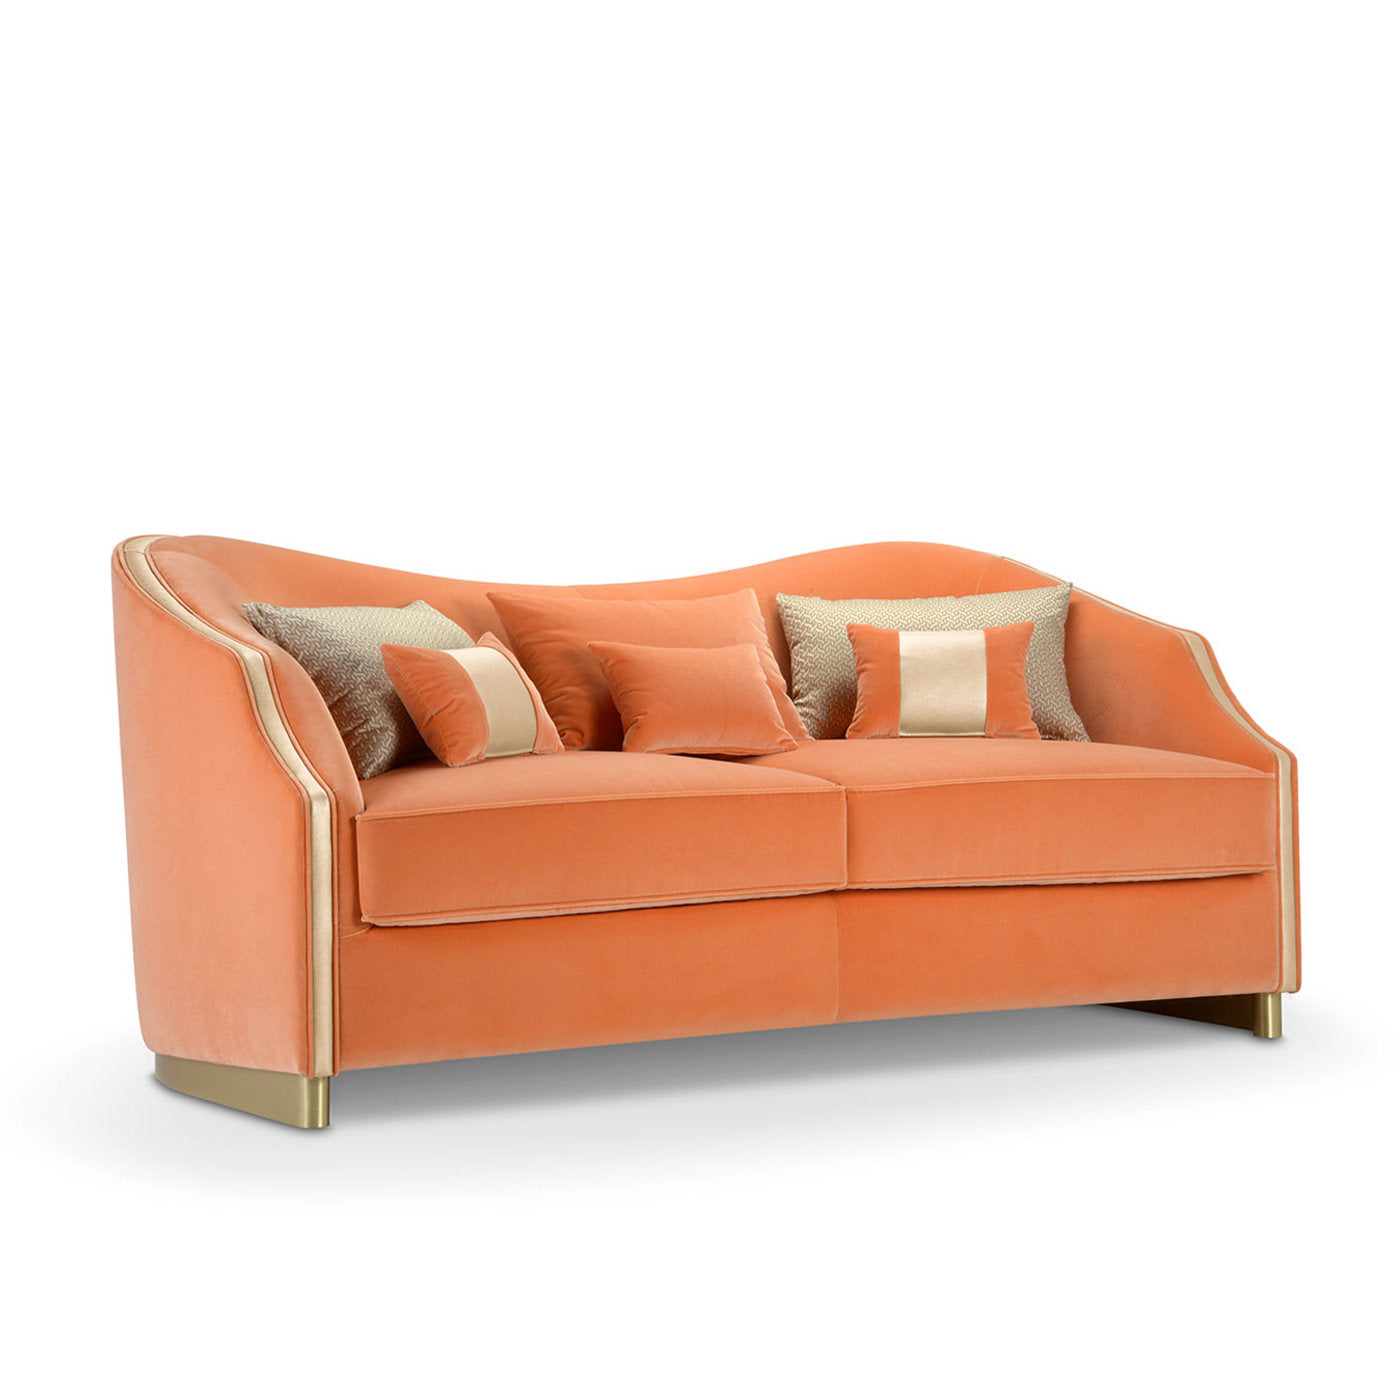 Cleio Orange 2-Seater Sofa - Alternative view 1